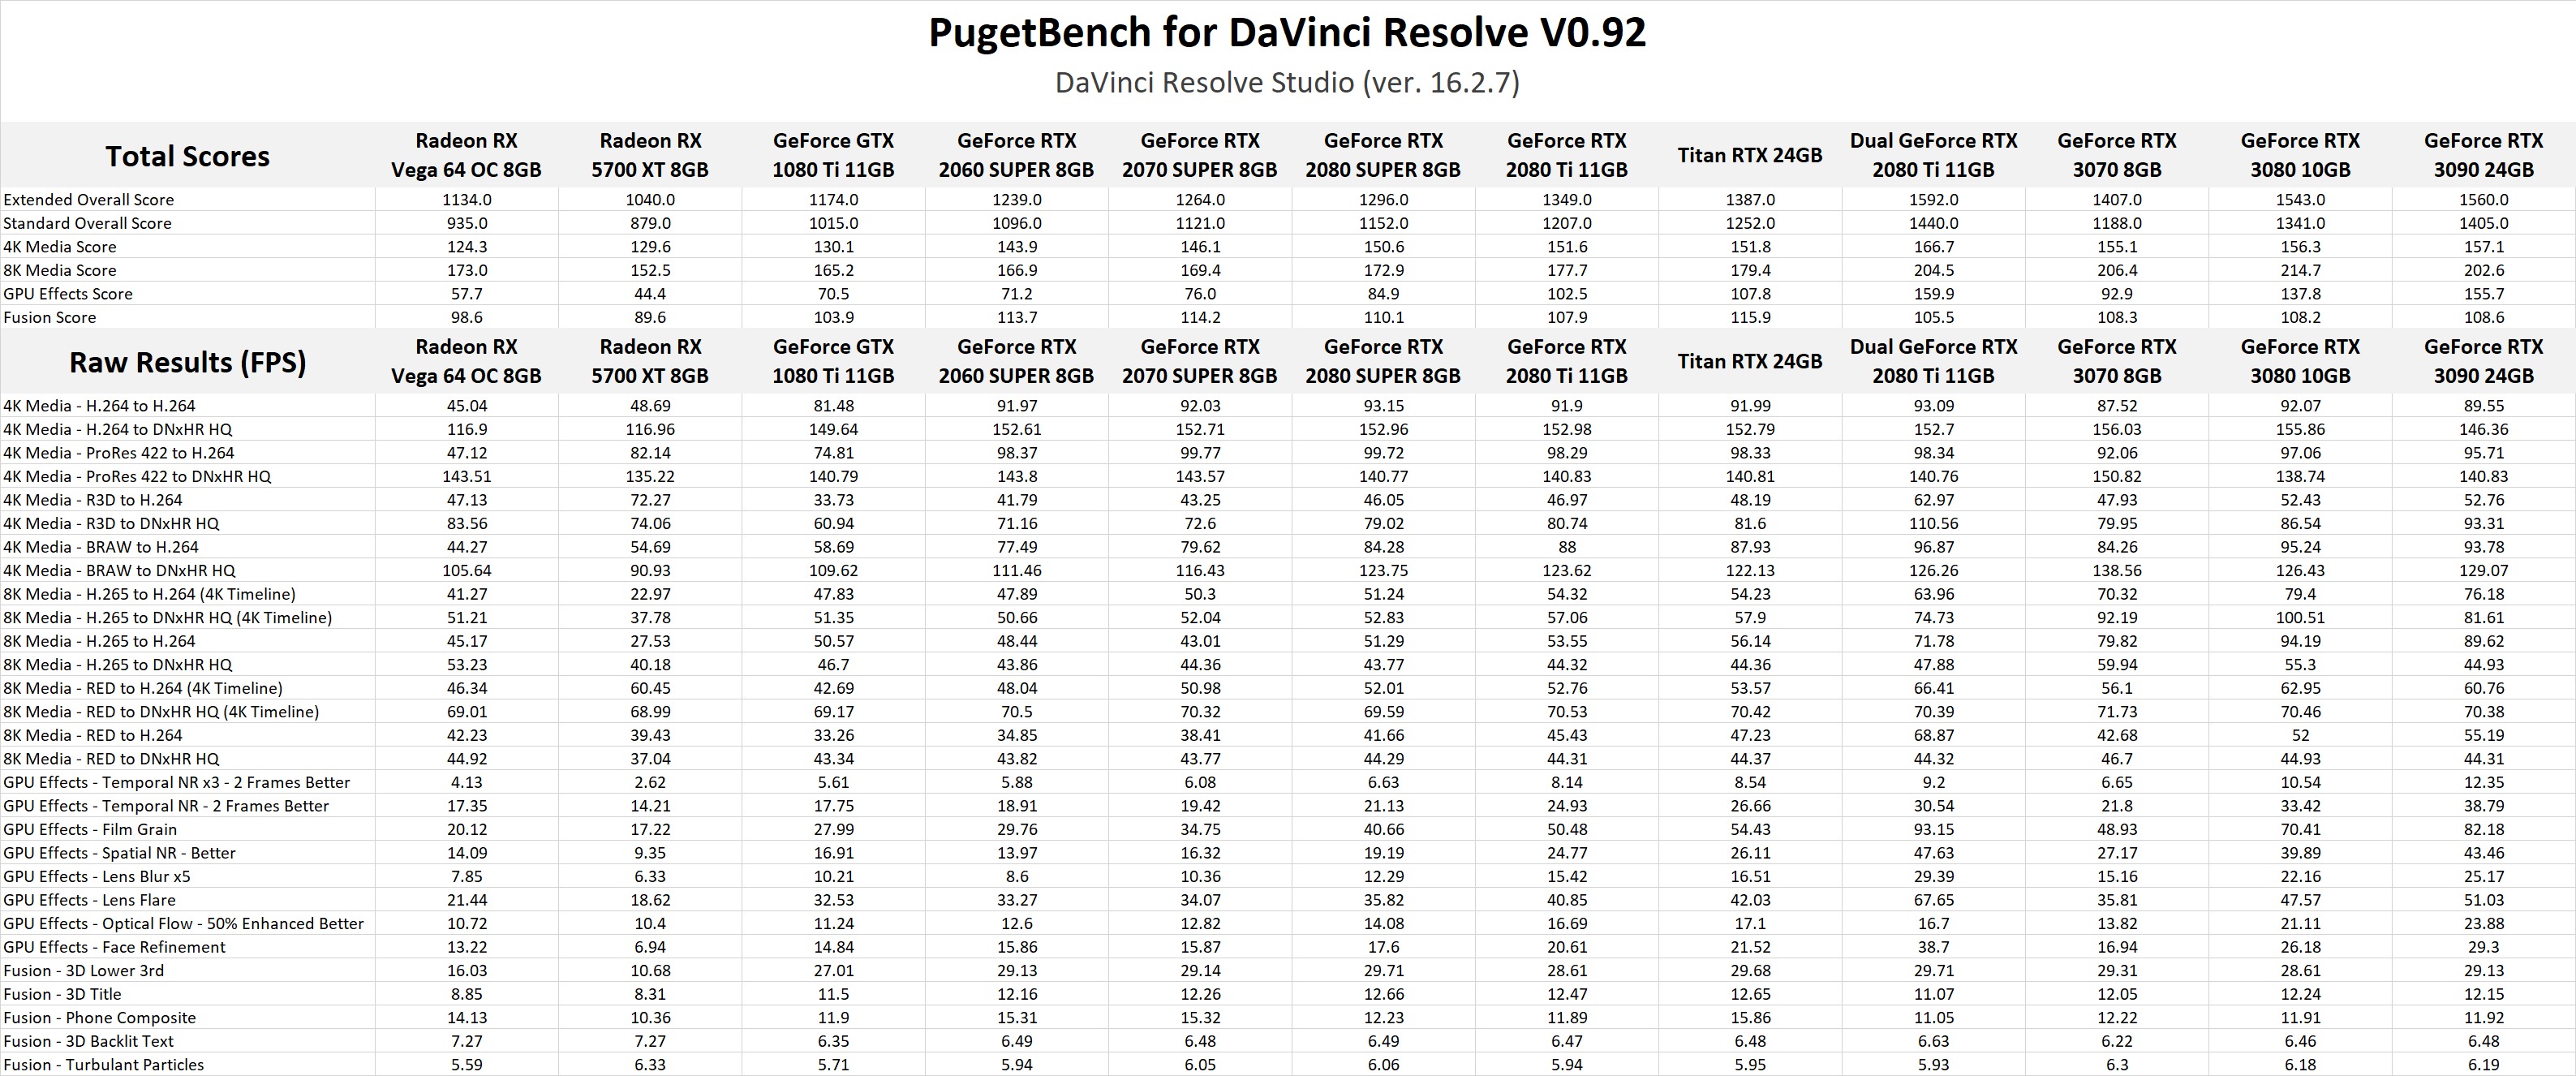 NVIDIA GeForce RTX 3070, 3080 & 3090 performance in DaVinci Resolve Studio